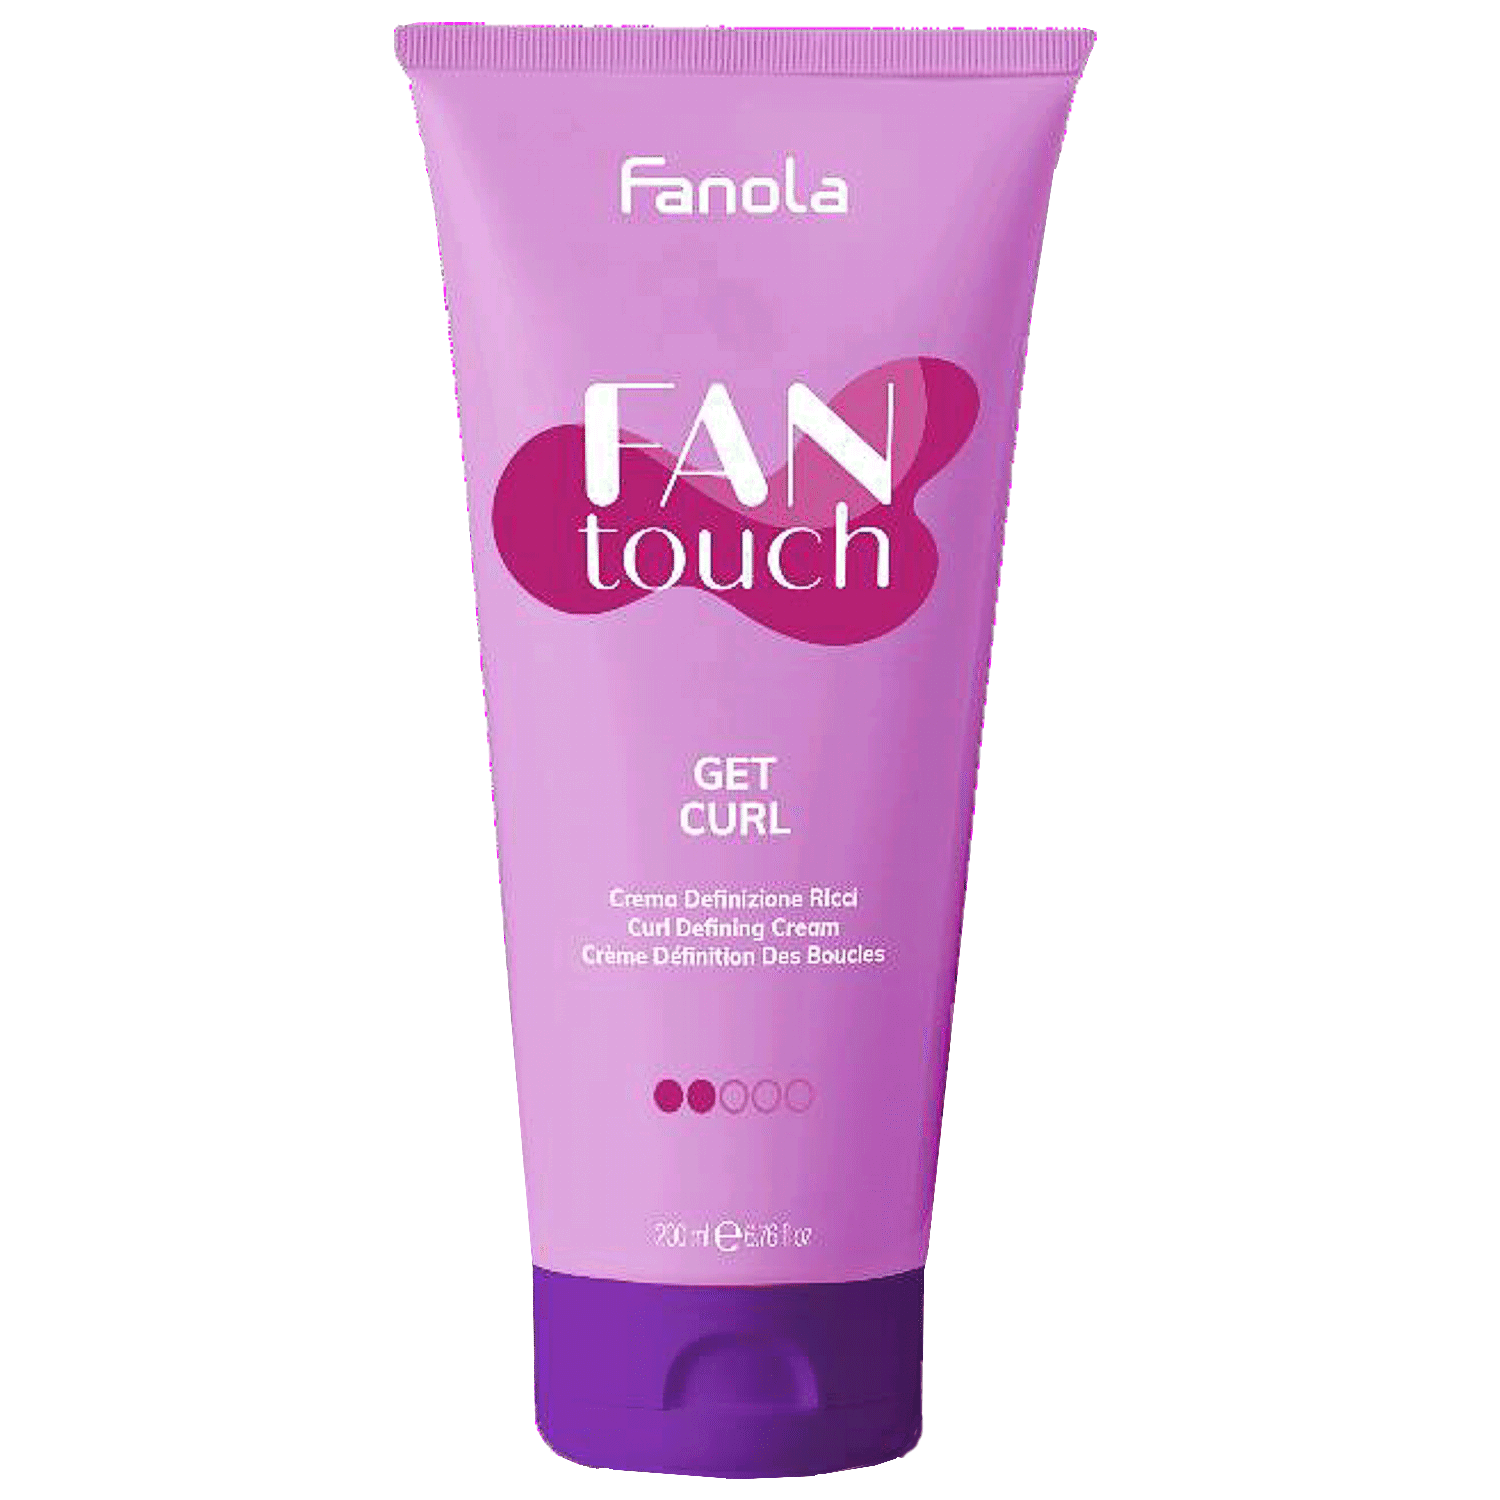 Fanola FANTOUCH Curl Defining Cream 200 ml